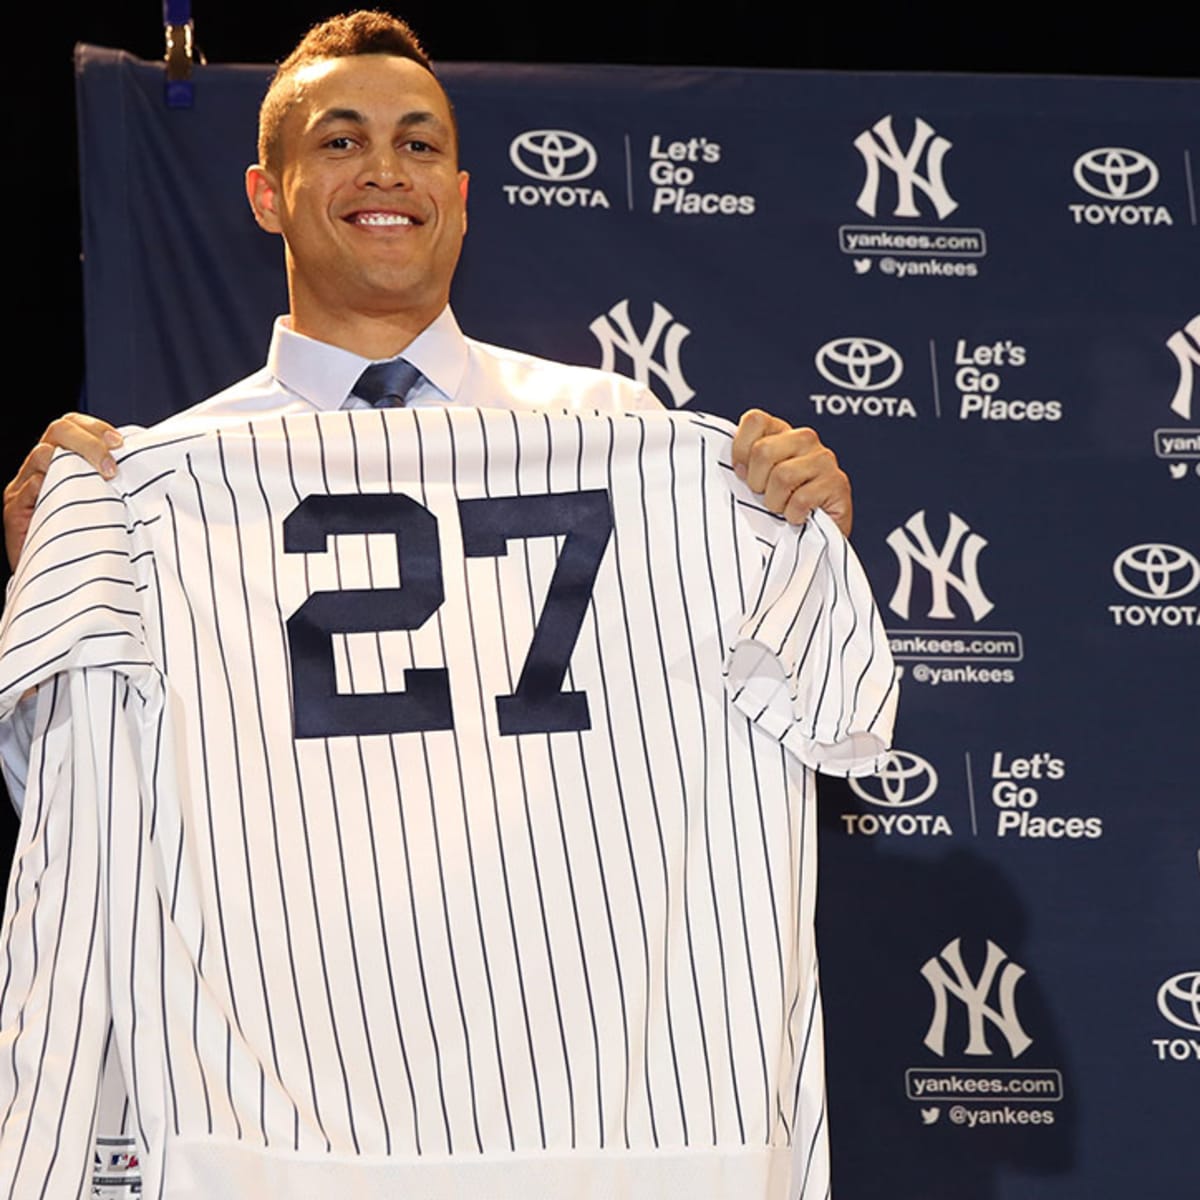 Giancarlo Stanton: Jose Fernandez predicted MVP, joining Yankees